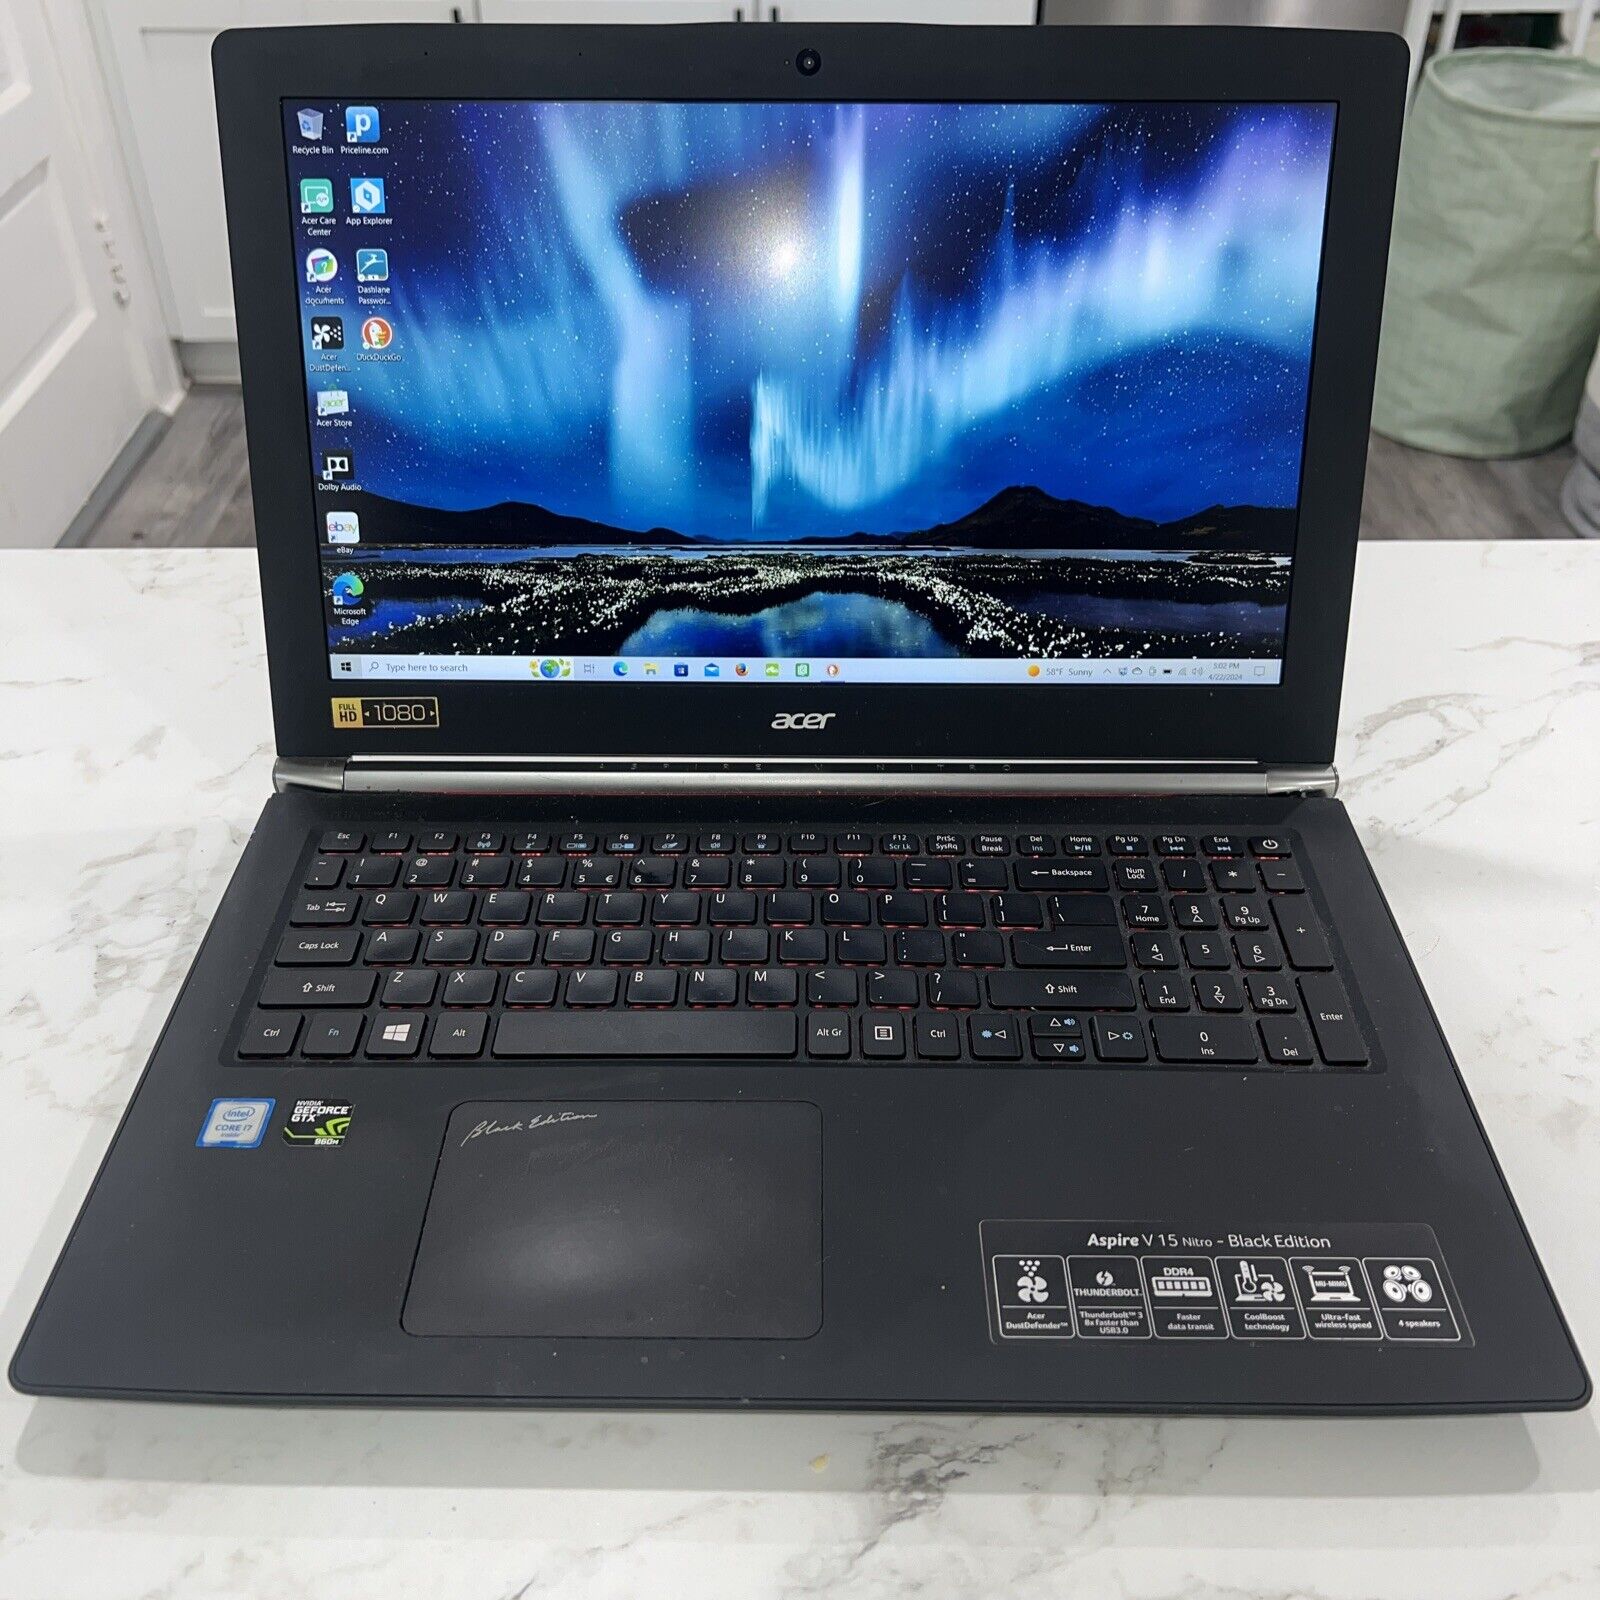 Acer Aspire V 15 Nitro Black Edition Intel Core i7-6700HQ - Old Gaming Laptop